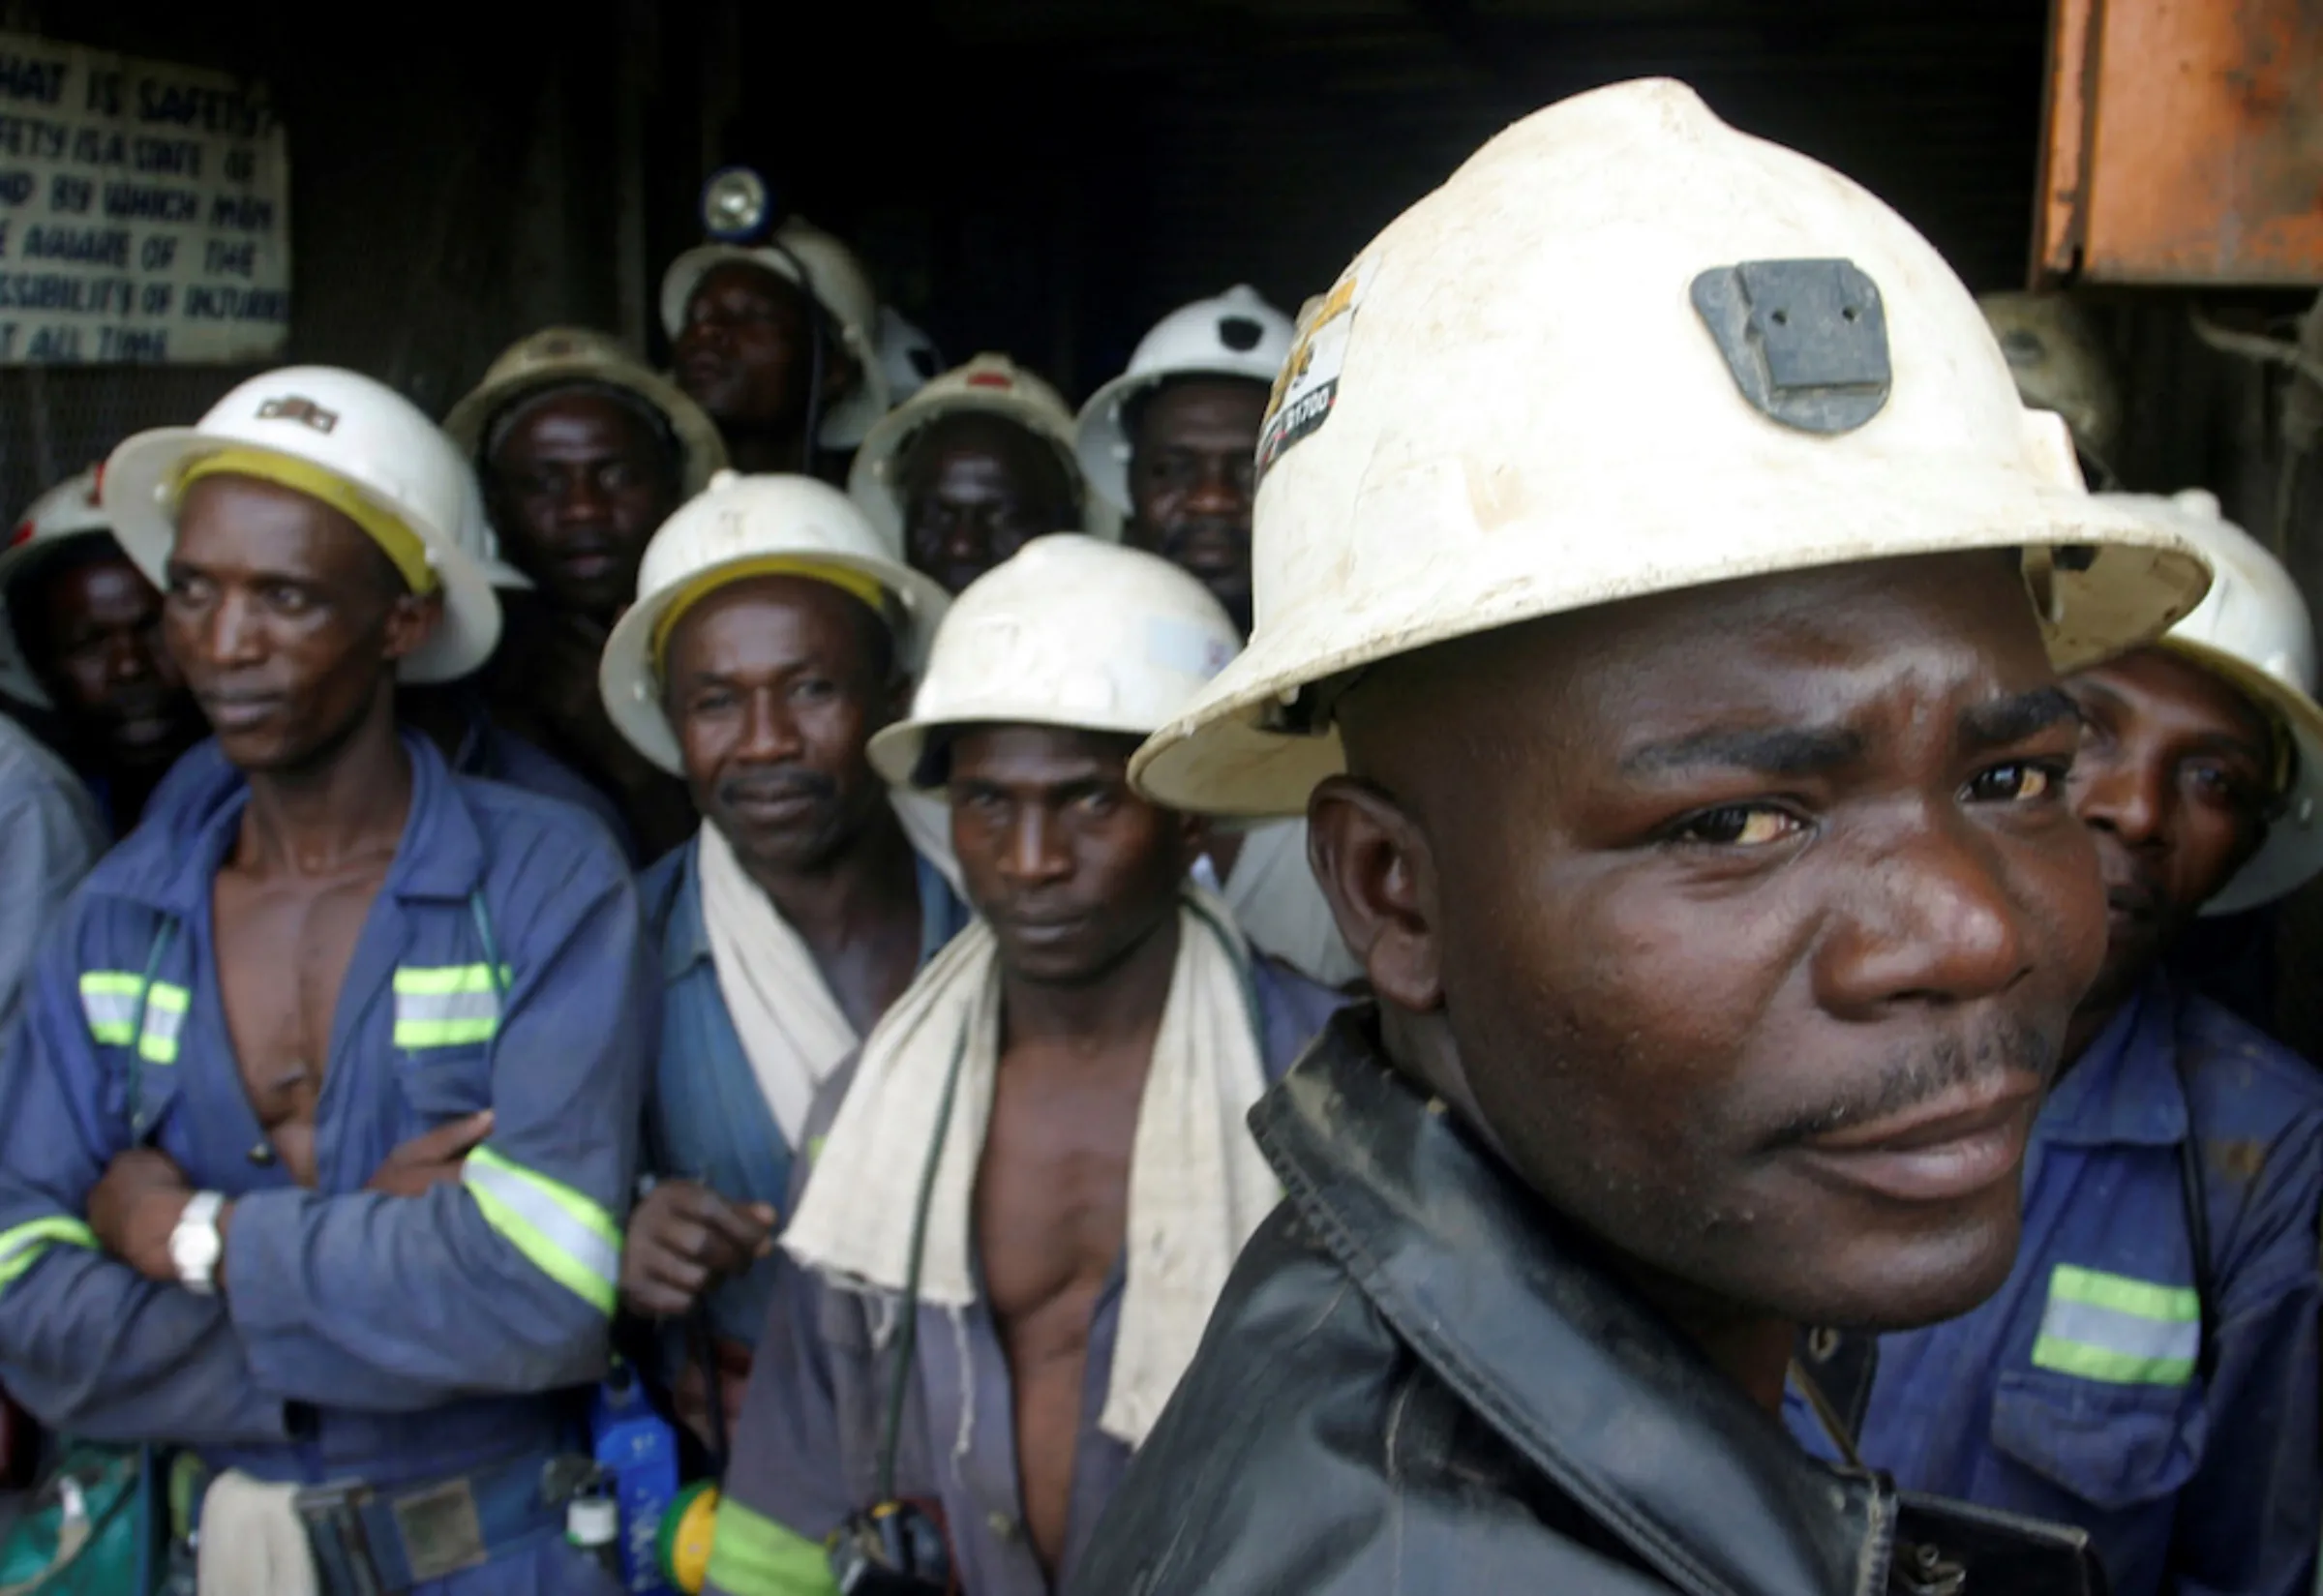 Konkola Copper Mines PLC workers wait in a lift before going to work underground in Konkola, April 12, 2005